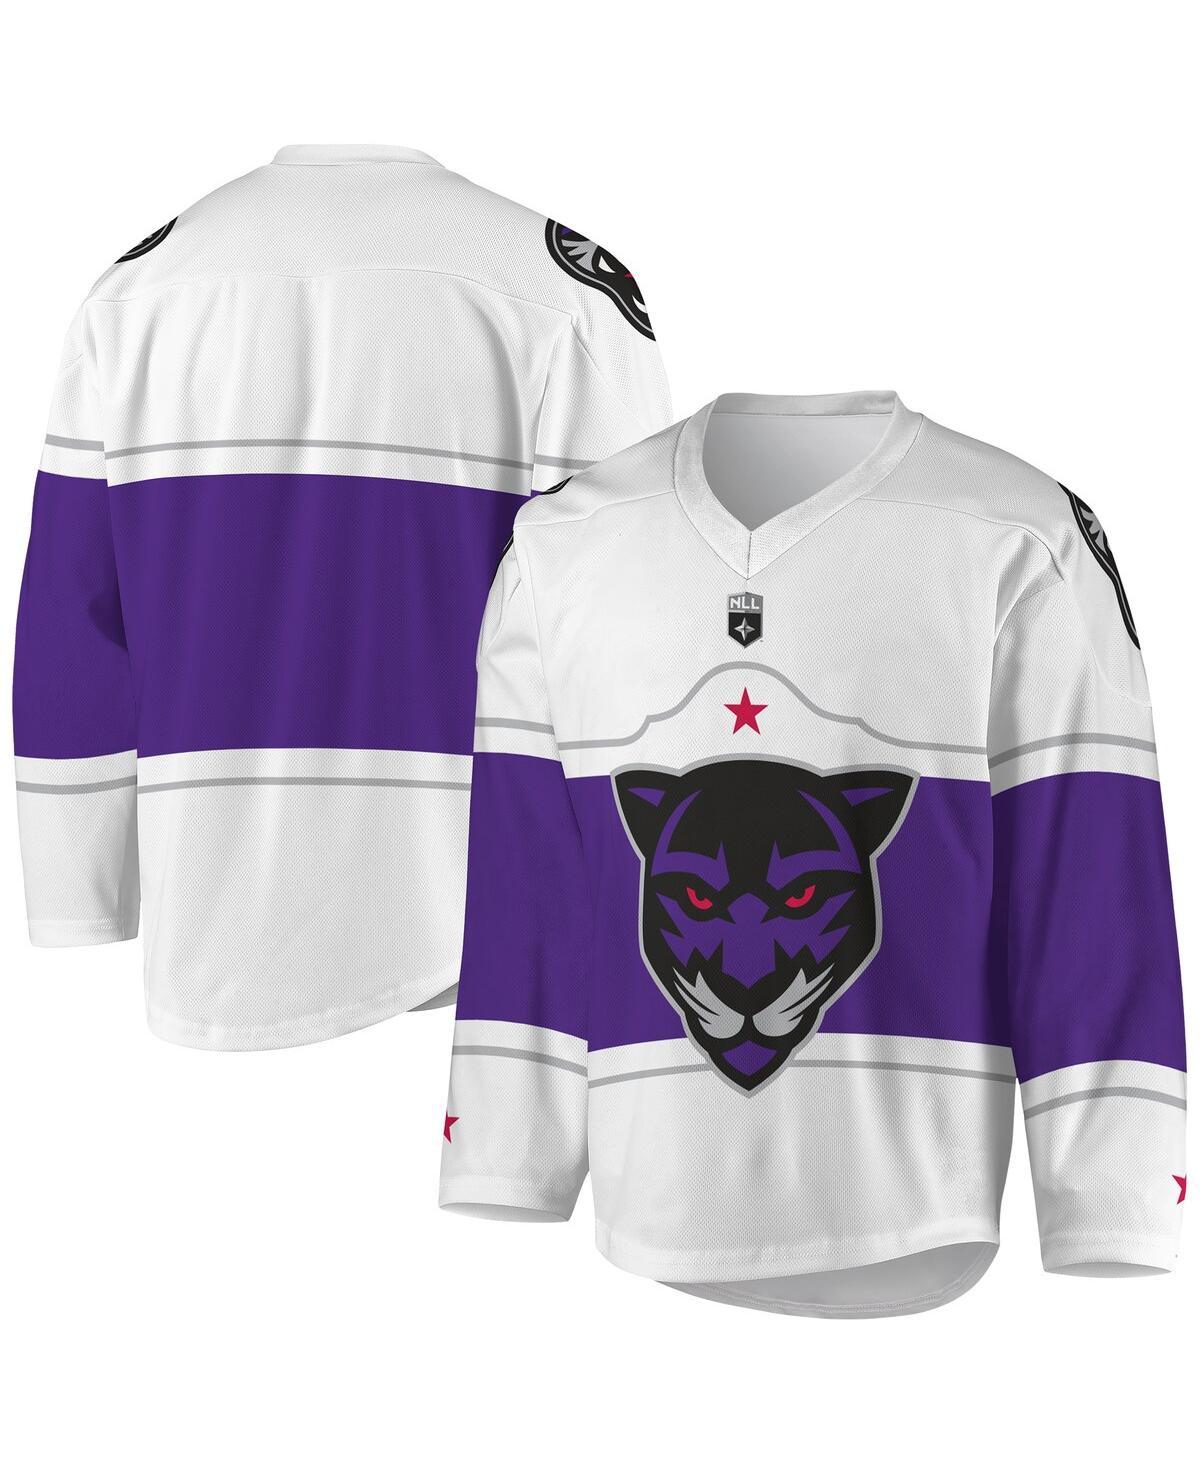 Men's White and Purple Panther City Lacrosse Club Replica Jersey - White, Purple